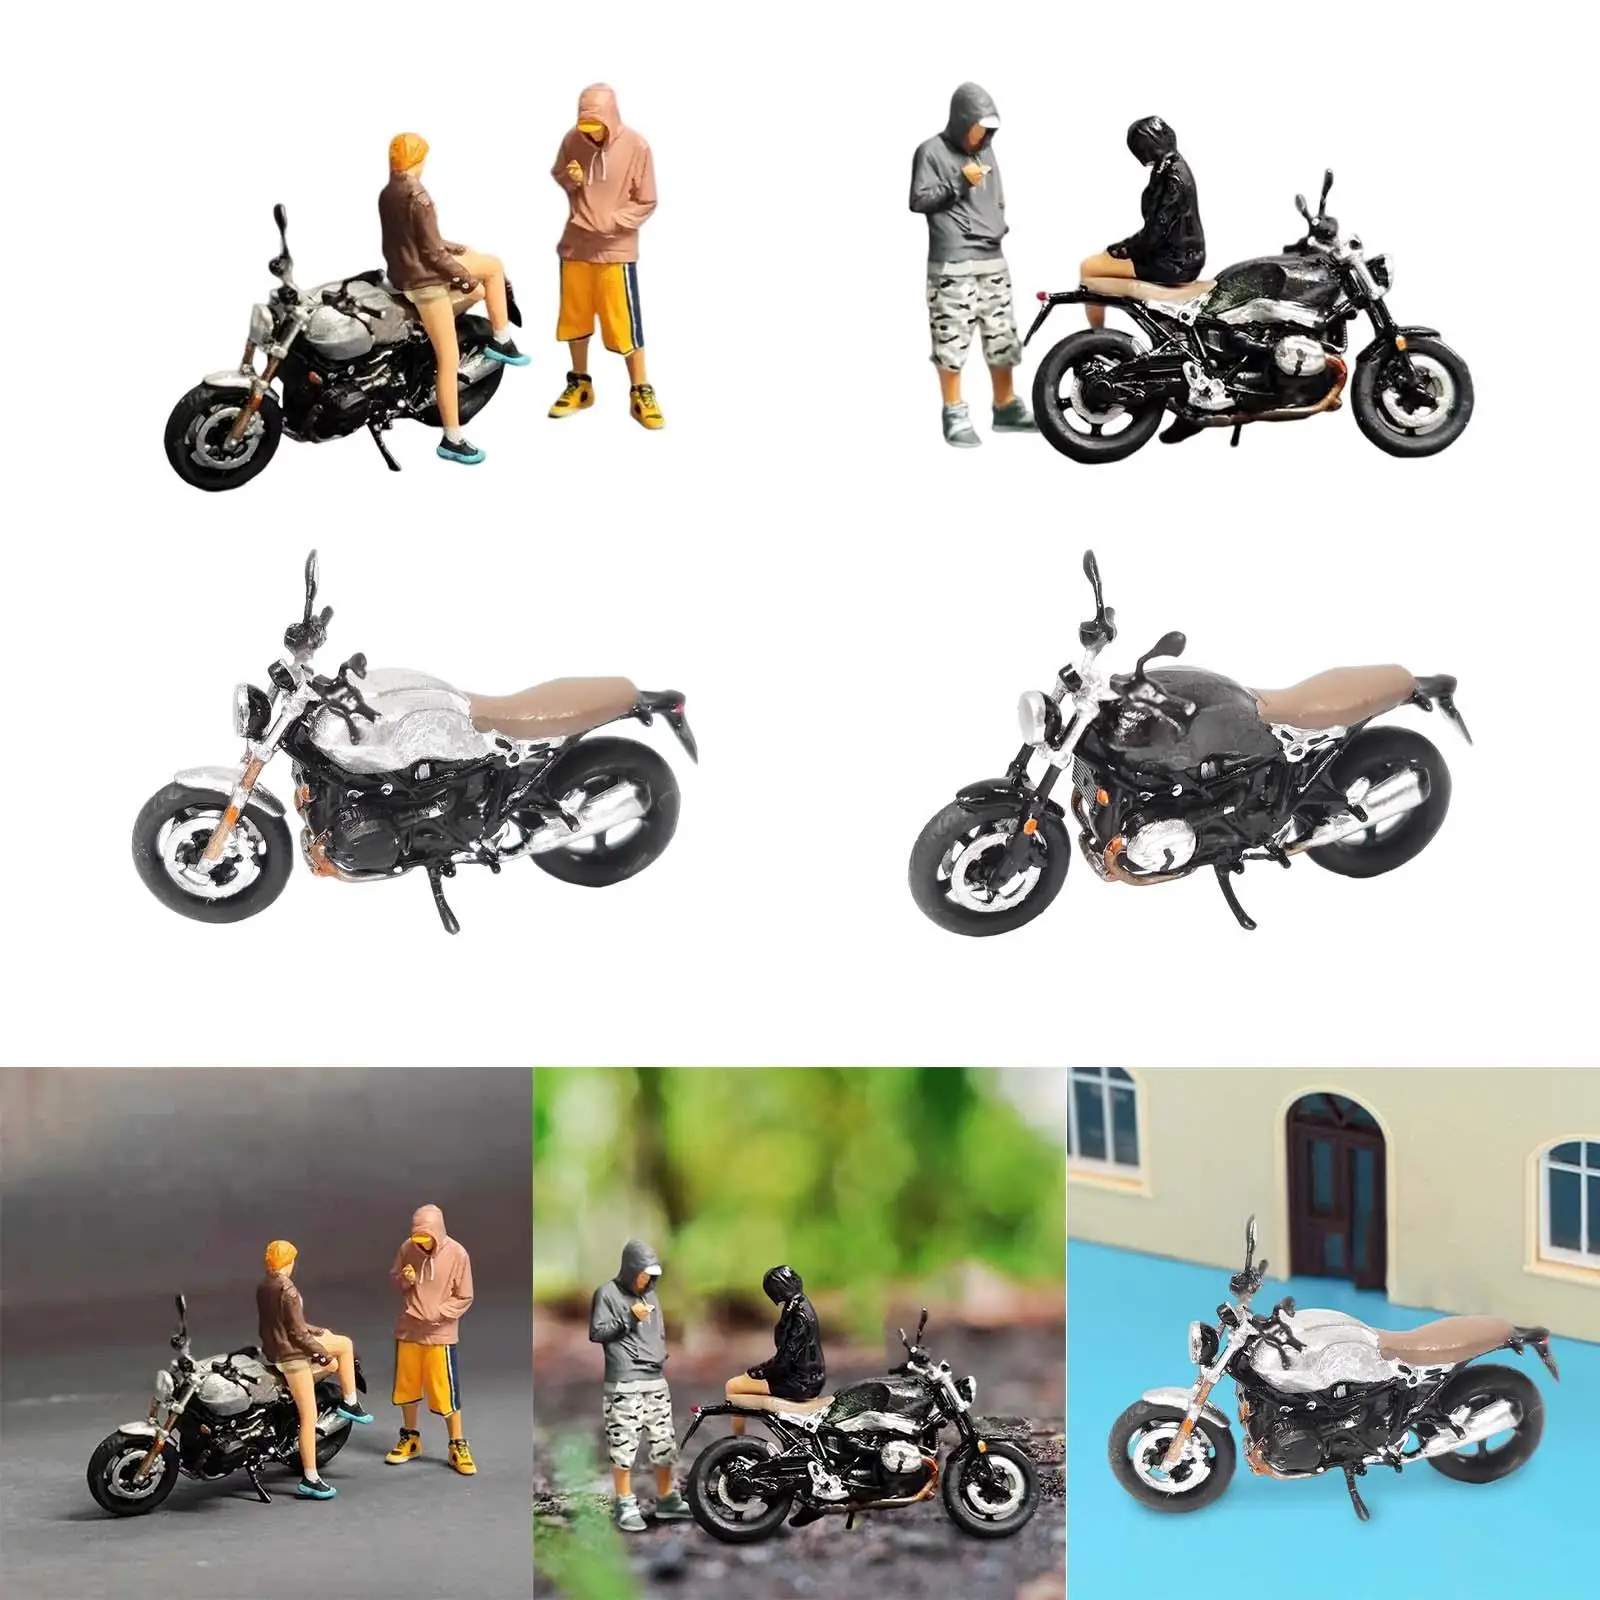 1/64 Figures Motorcycle Resin Doll Sand table Scene Miniature Scenes Desktop Ornament Tiny People Diorama Scenery Doll Figurines